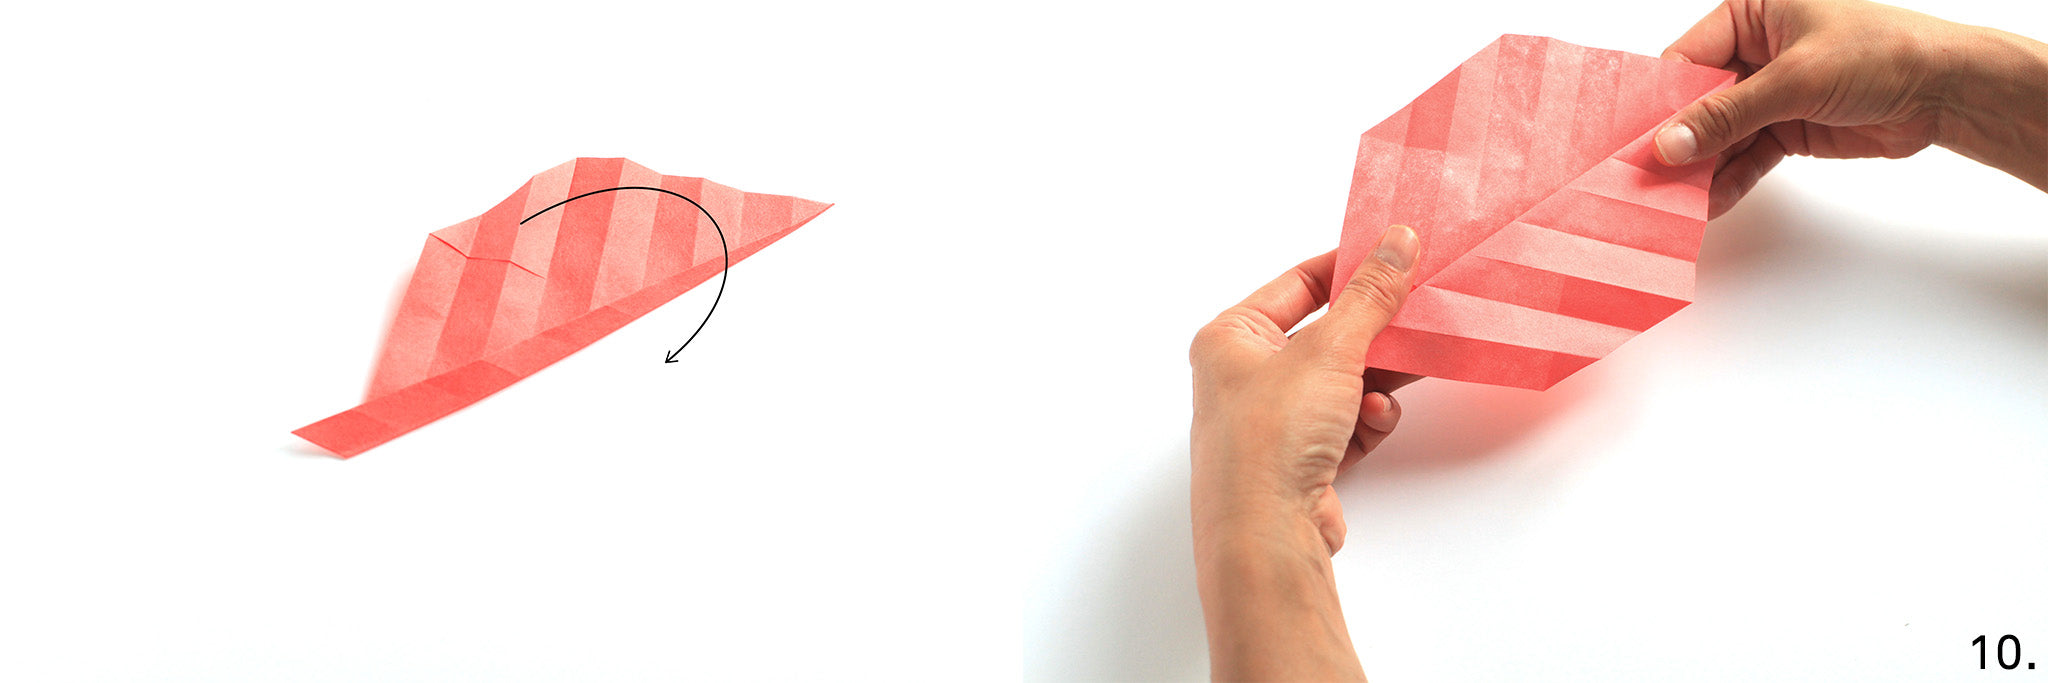 article-tutorial-origami-sheet-step-10